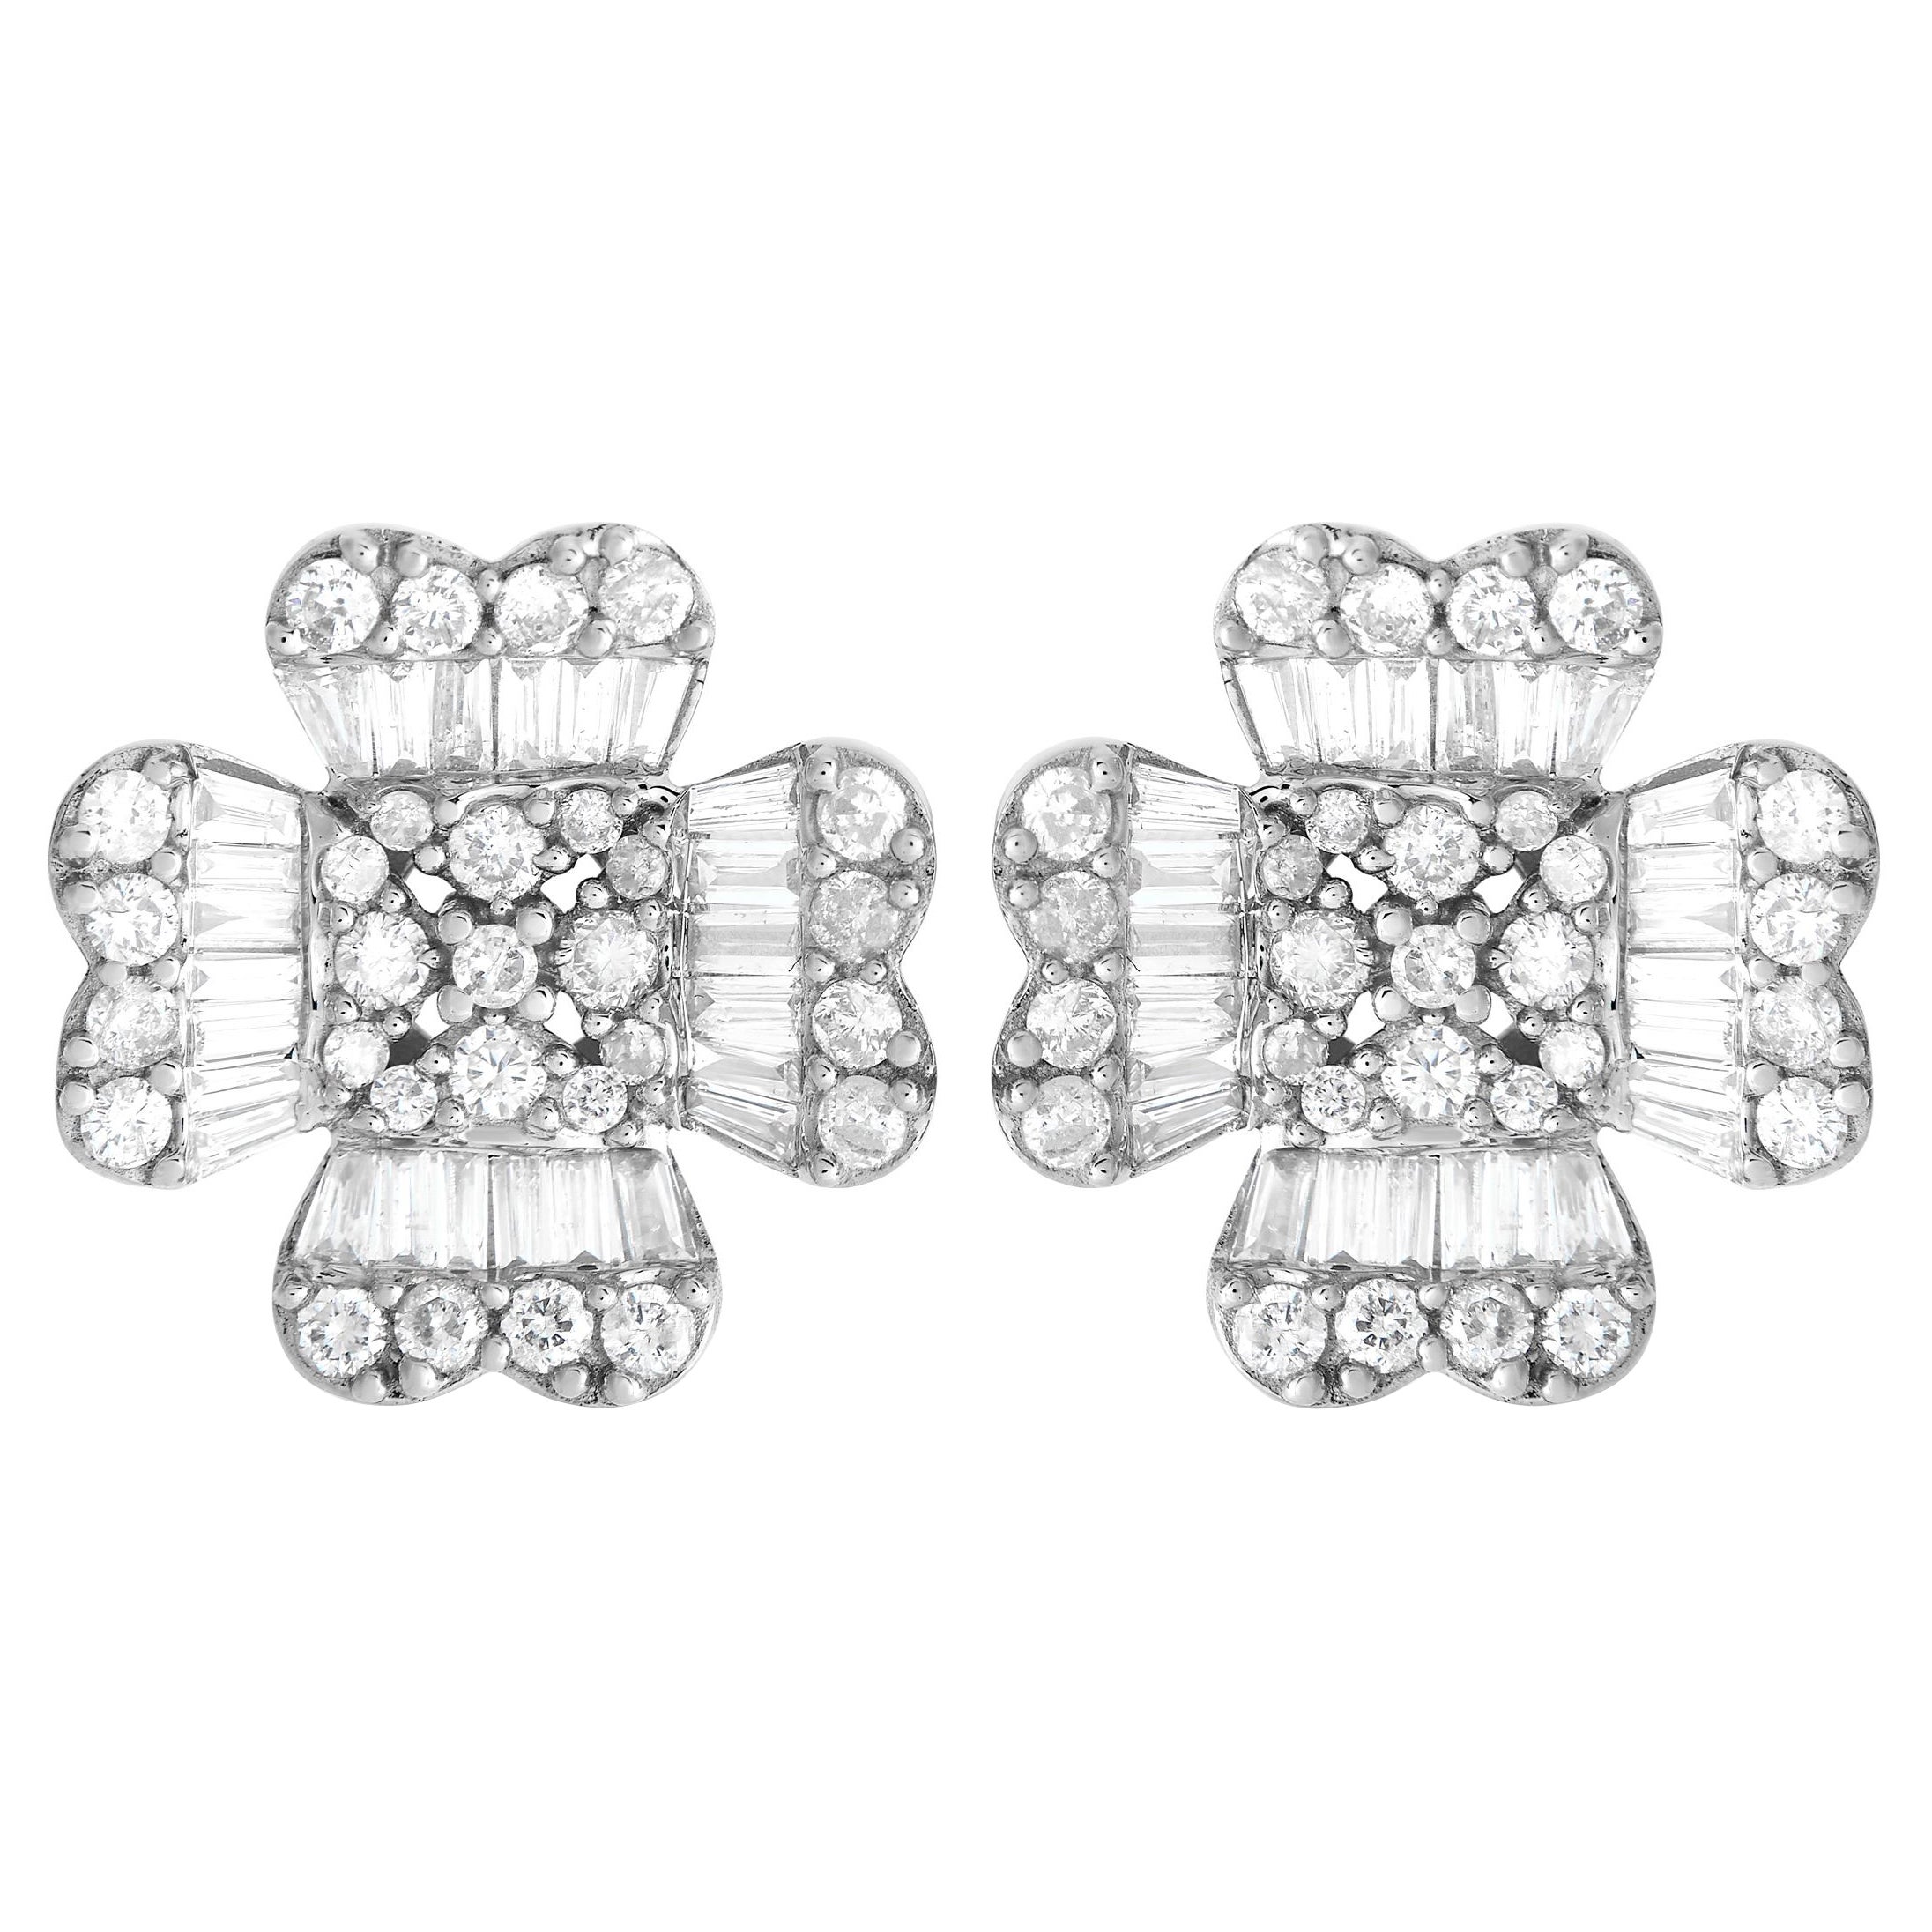 14K White Gold 1.0ct Diamond Round and Baguette Flower Earrings ER28435-W For Sale